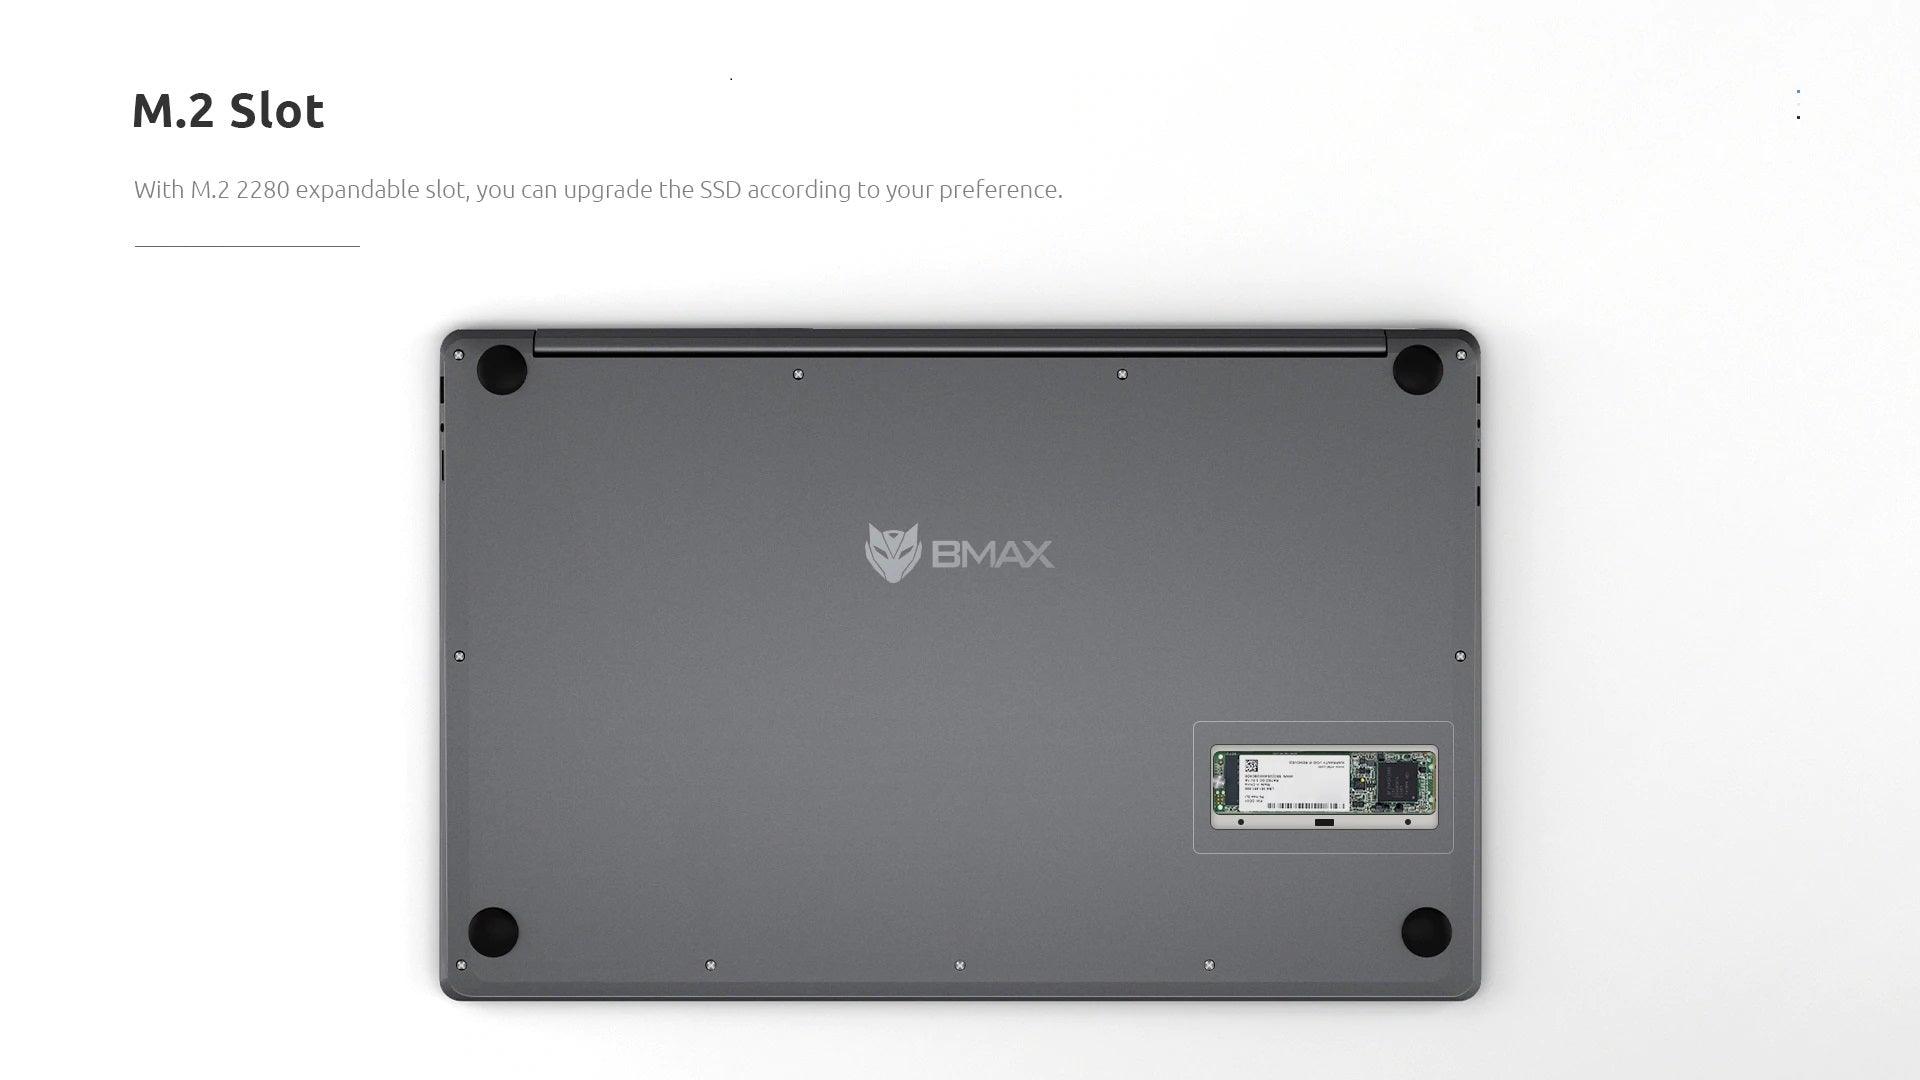 BMAX X15 Laptop - 15.6 Inch, Intel Gemini Lake N4100, 8GB RAM, 128GB SSD, Intel UHD Graphics 600 - dealskart.com.au